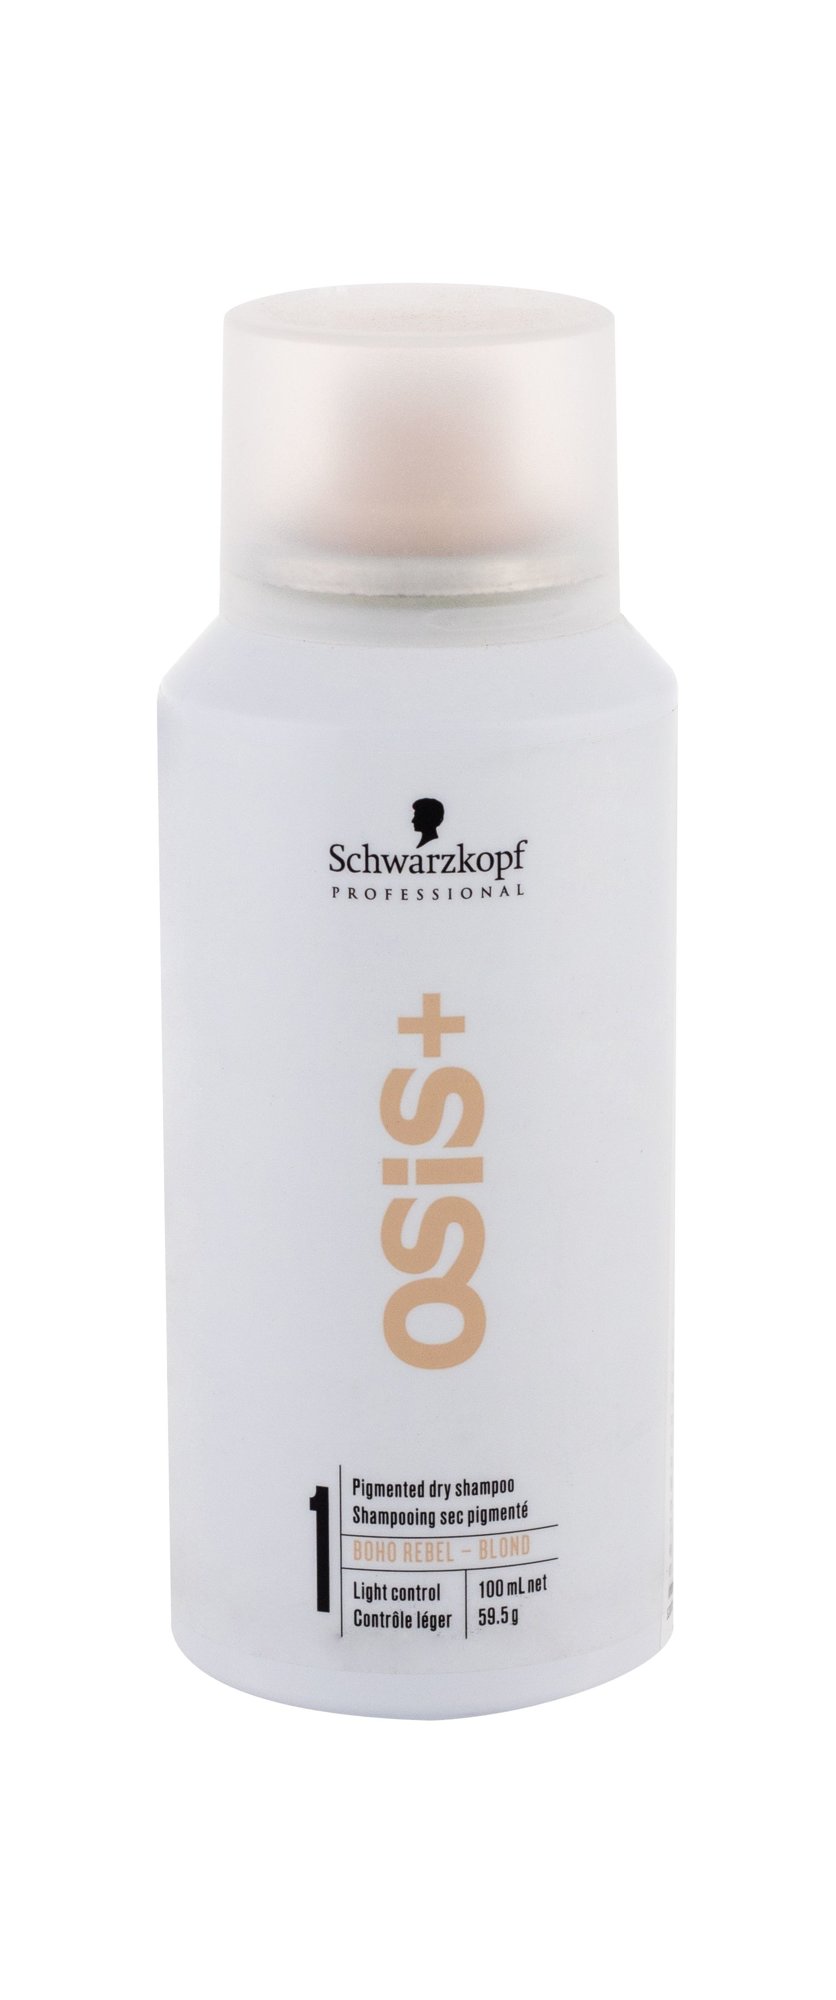 Schwarzkopf  Osis+ Boho Rebel 100ml sausas šampūnas